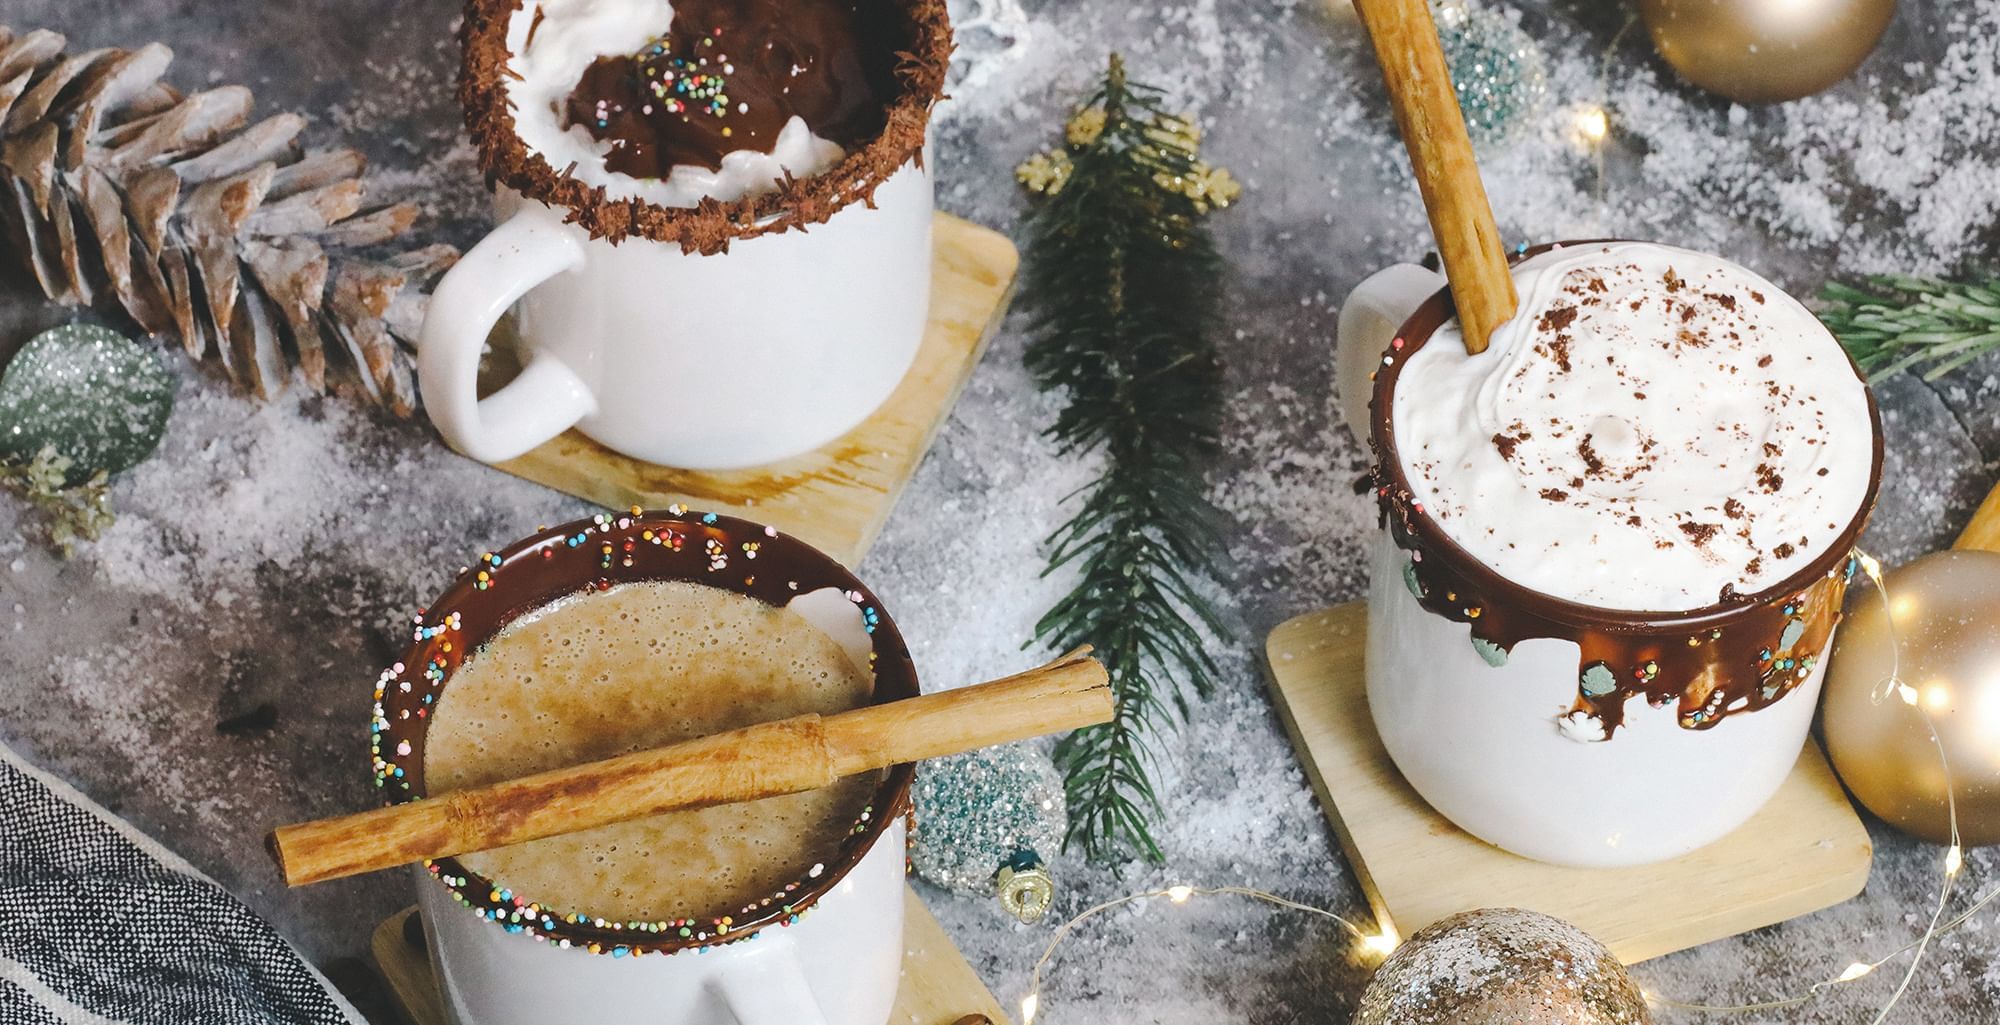 DIY Hot Chocolate Bar Ideas & Toppings - Lake Champlain Chocolates